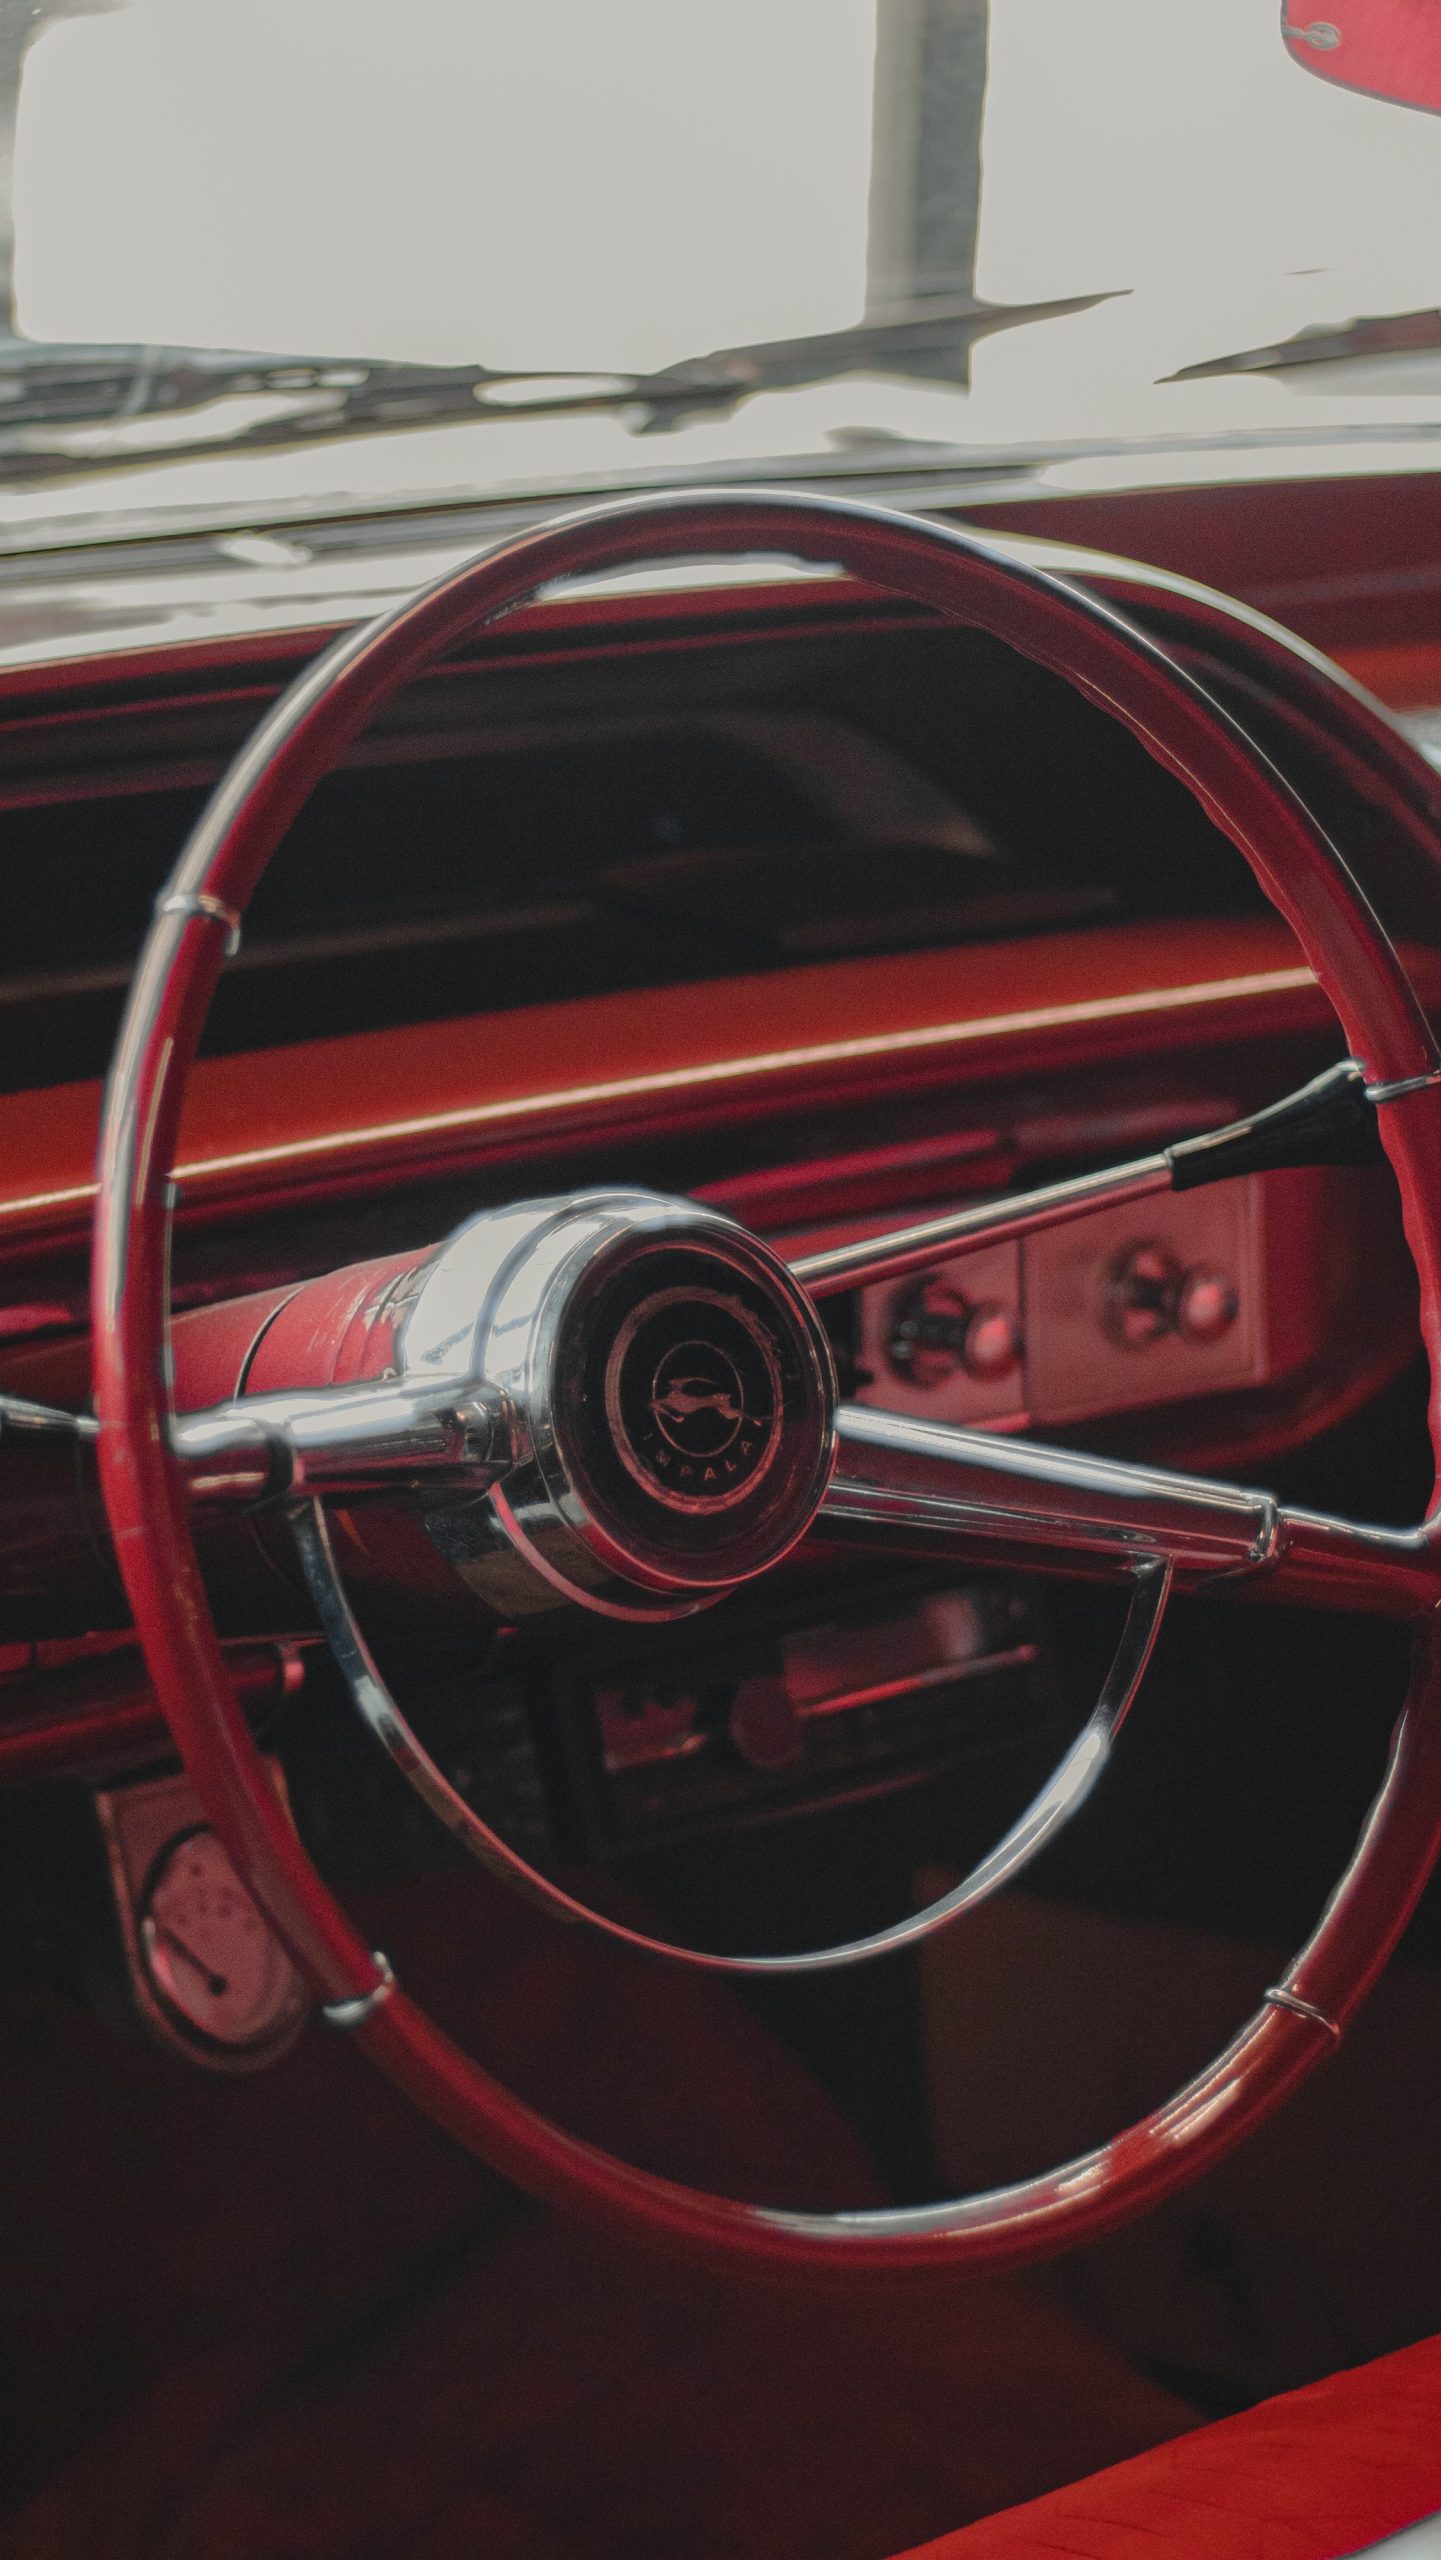 Chevy Impala Steering Wheel